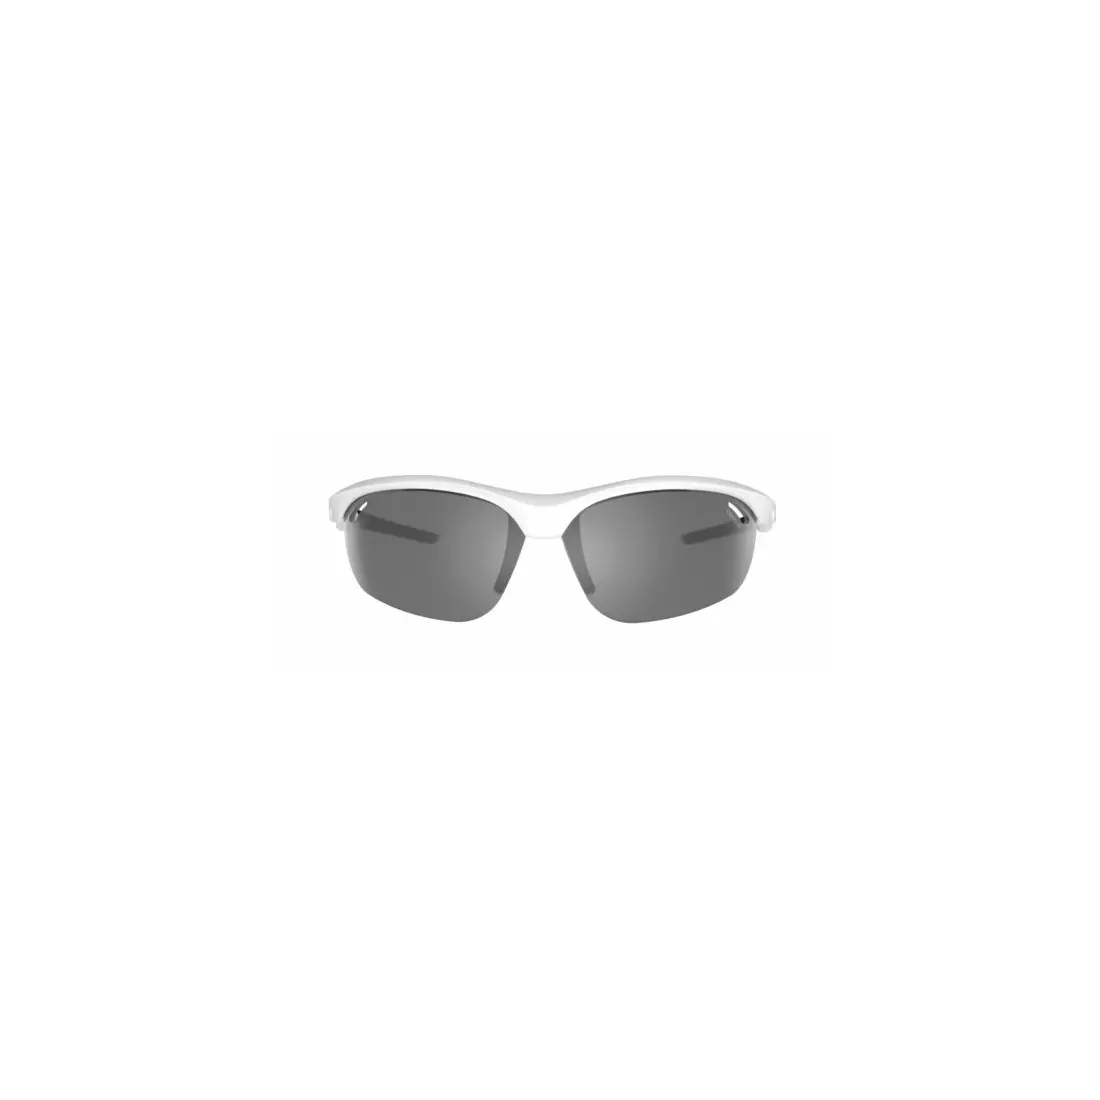 TIFOSI VELOCE FOTOTEC photochromic glasses matte white (Smoke PHOTOCHROME 47.7%-15.2% light transmission) TFI-1040301234